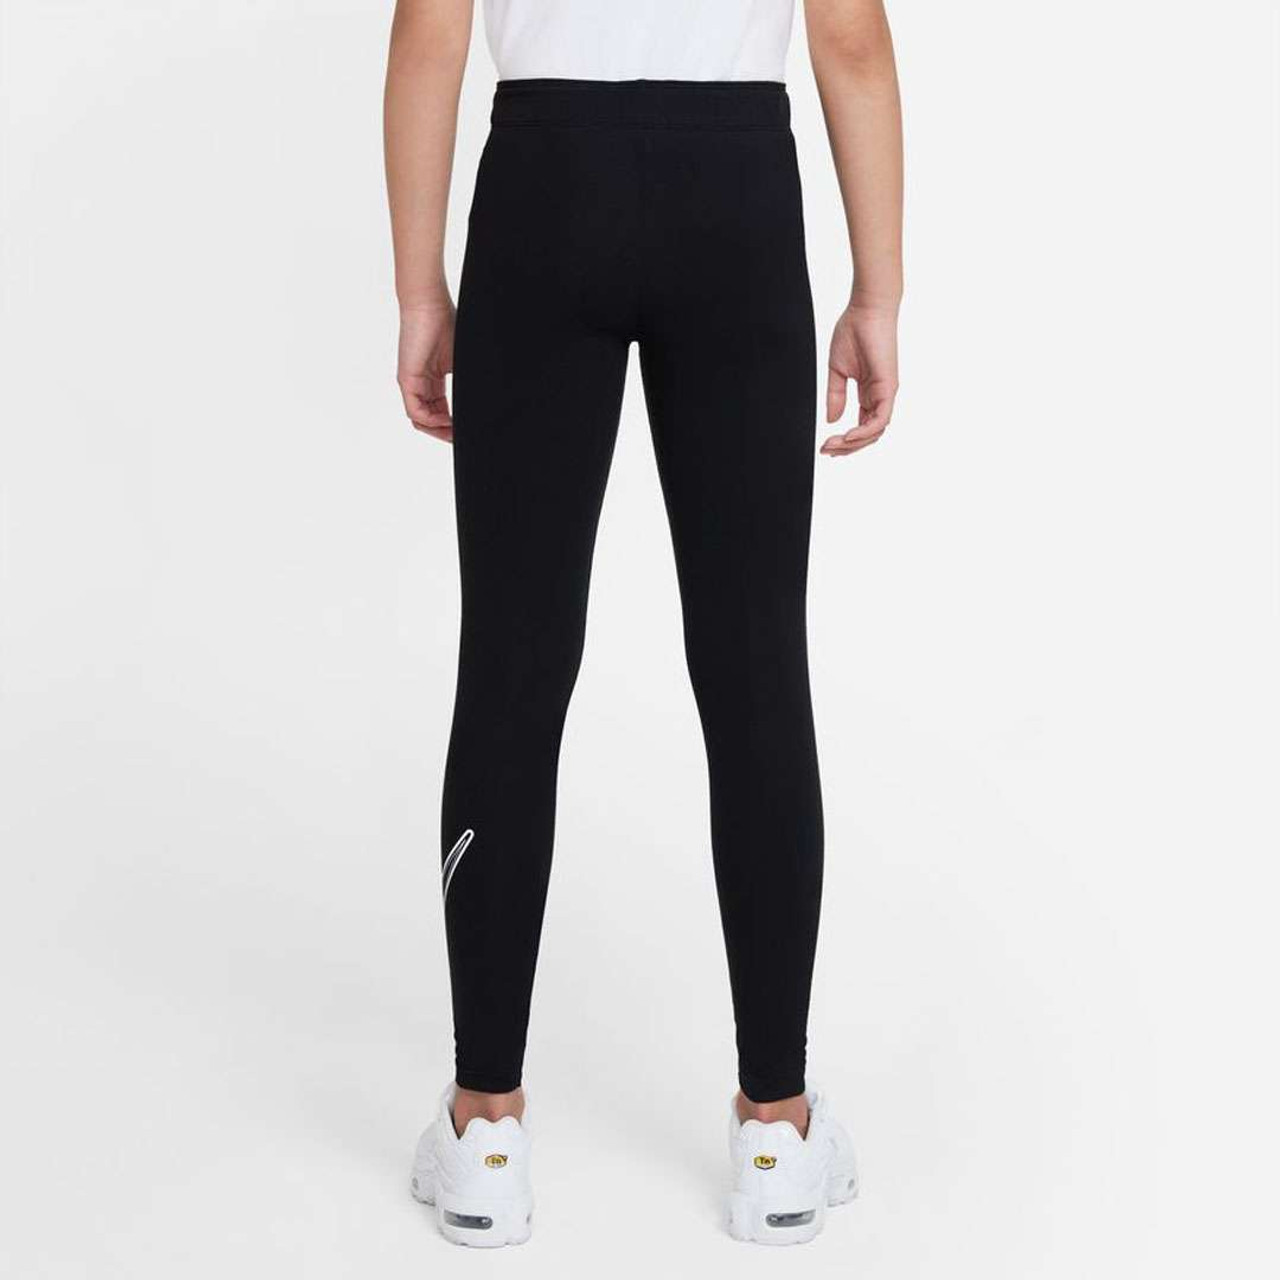 Nike Girls' Sportswear Graphic Leggings $ 29.99